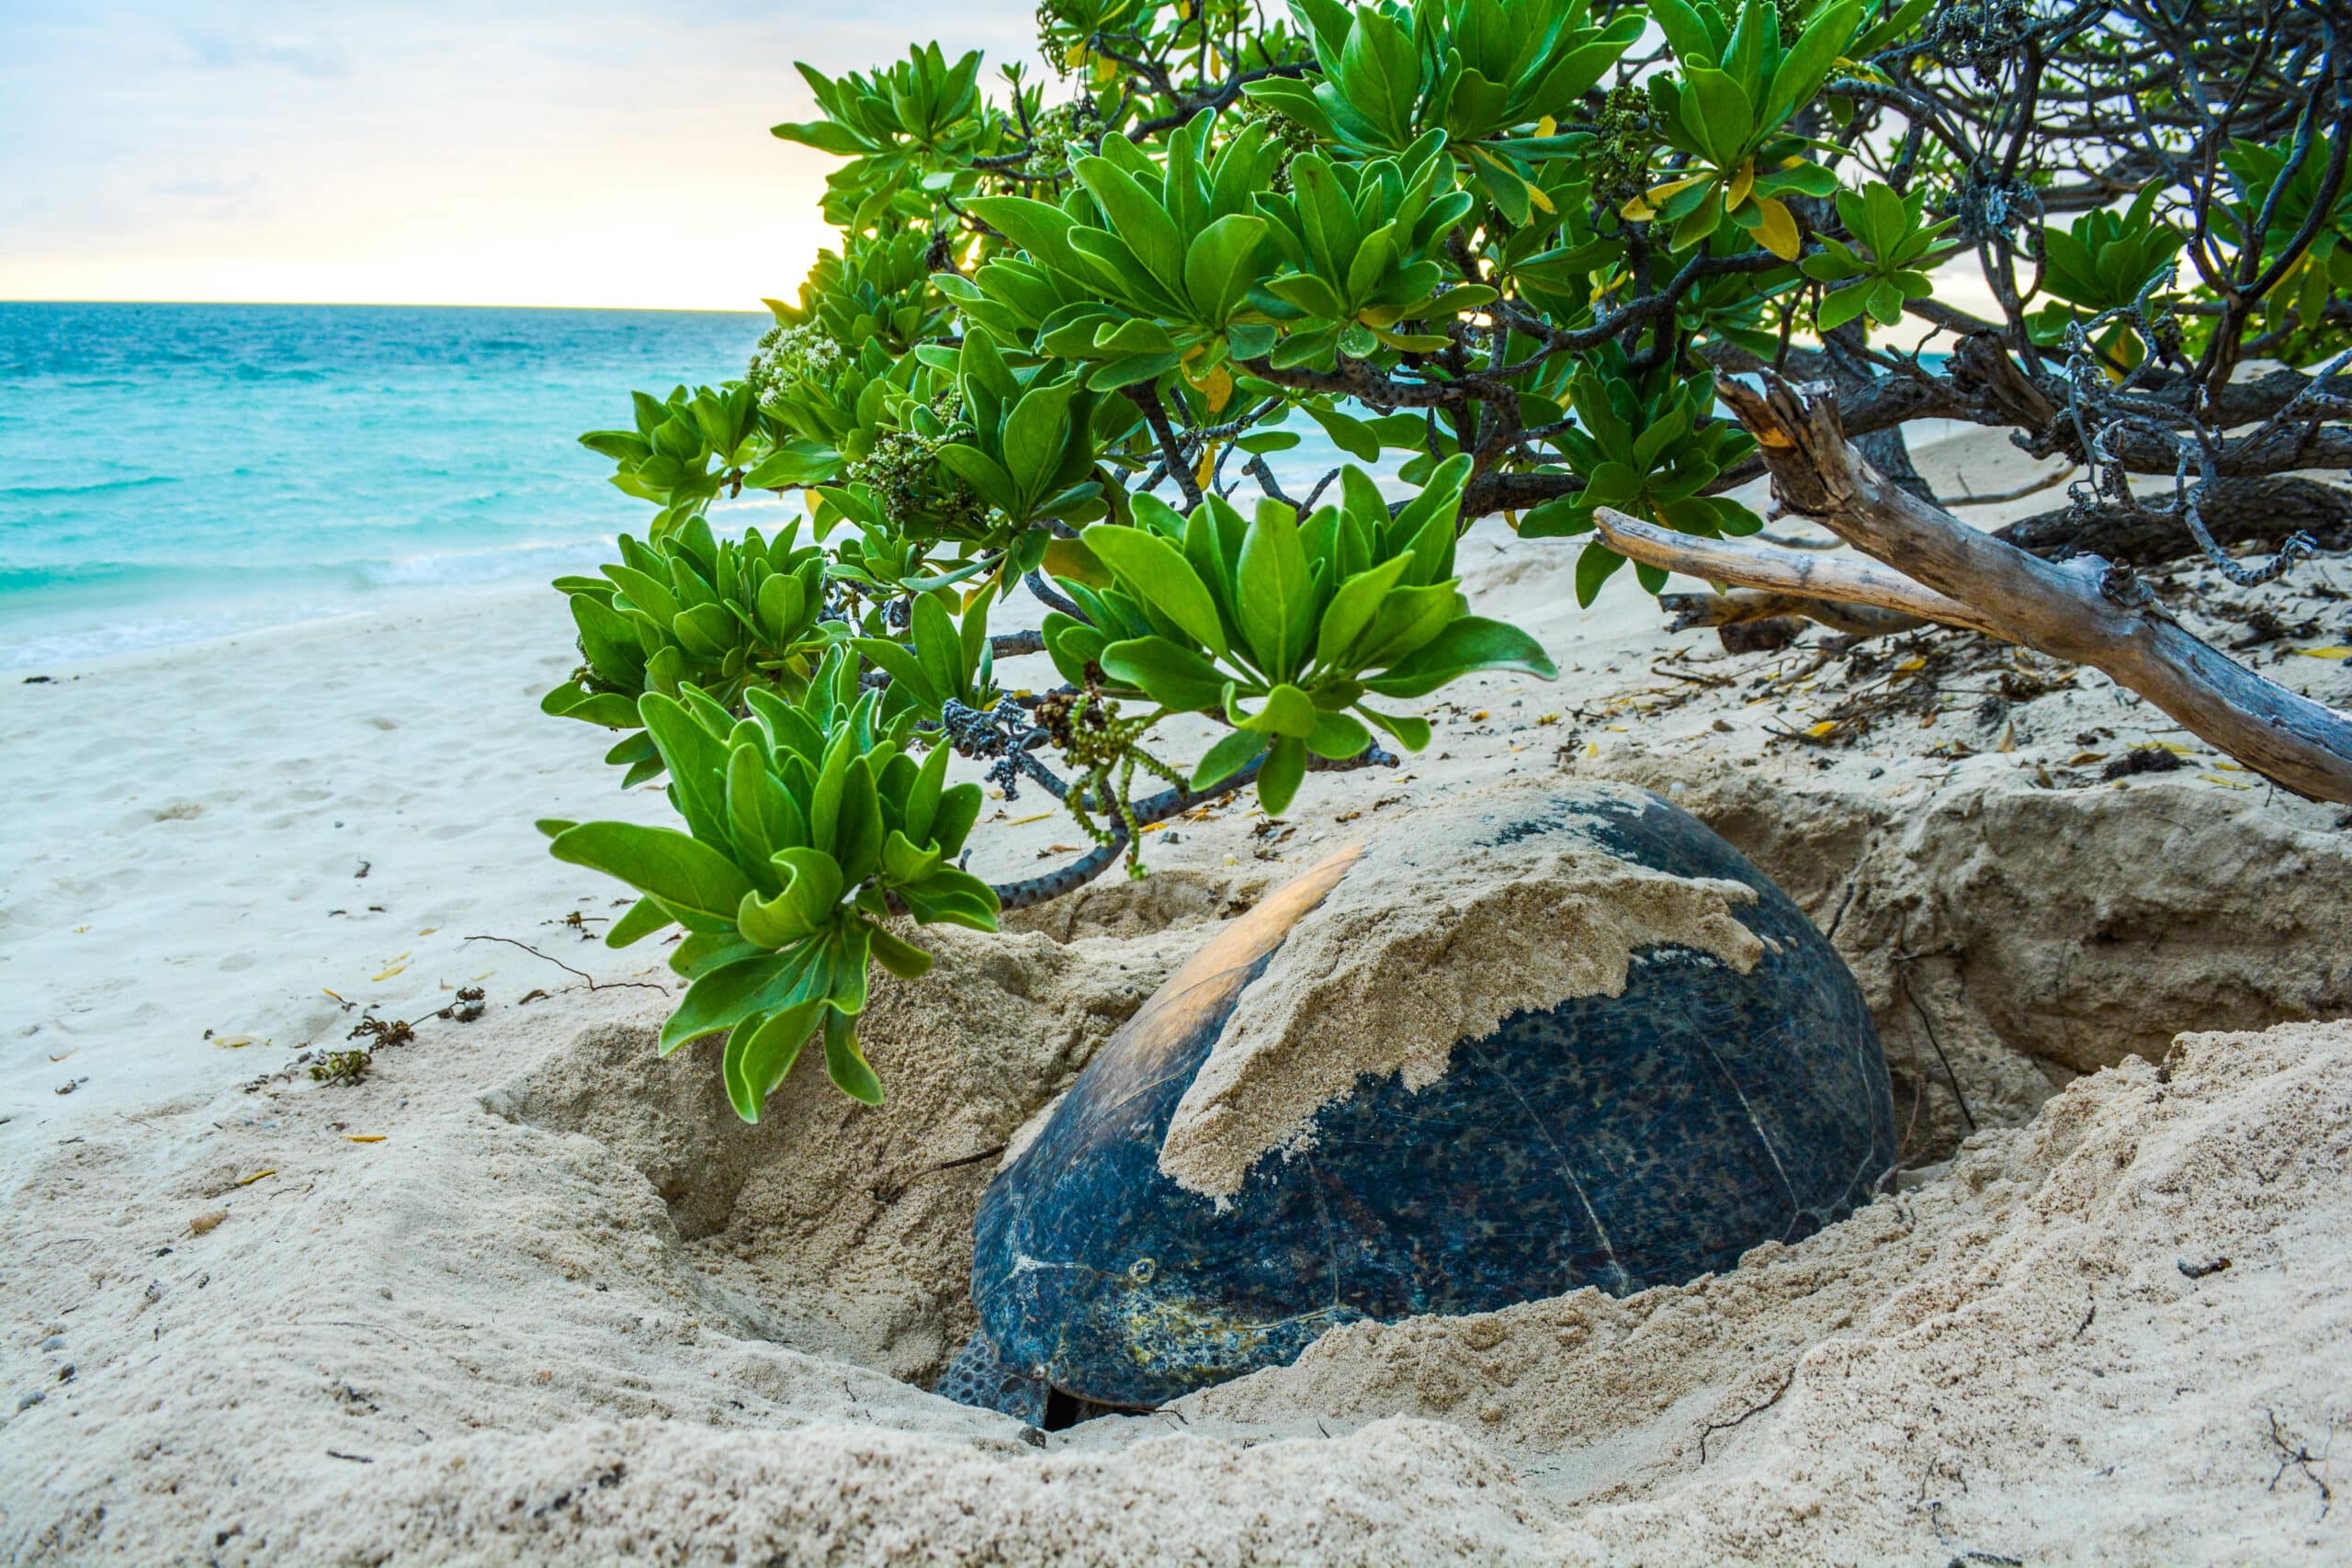 Turtle nesting beach